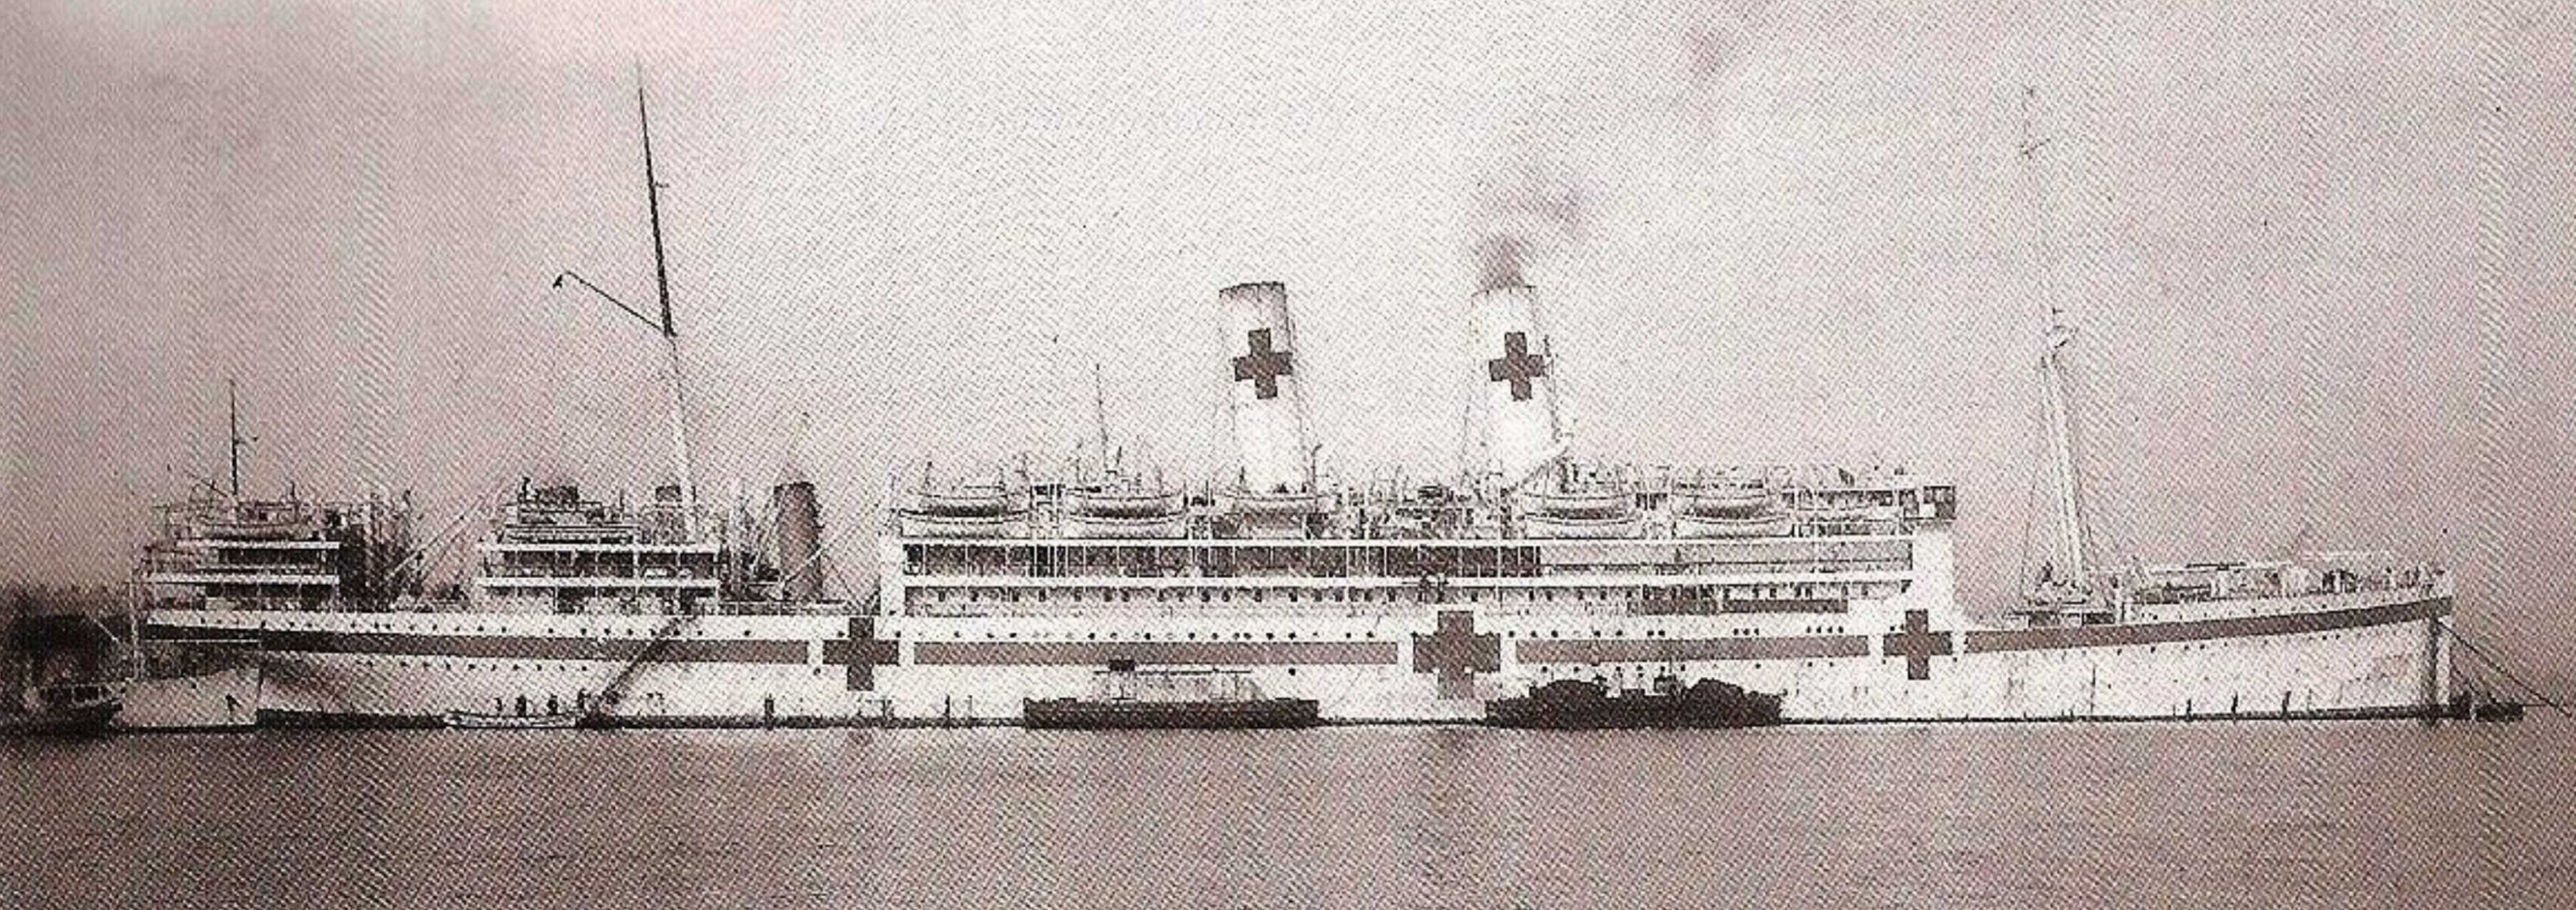 La nave ospedale italiana Gradisca